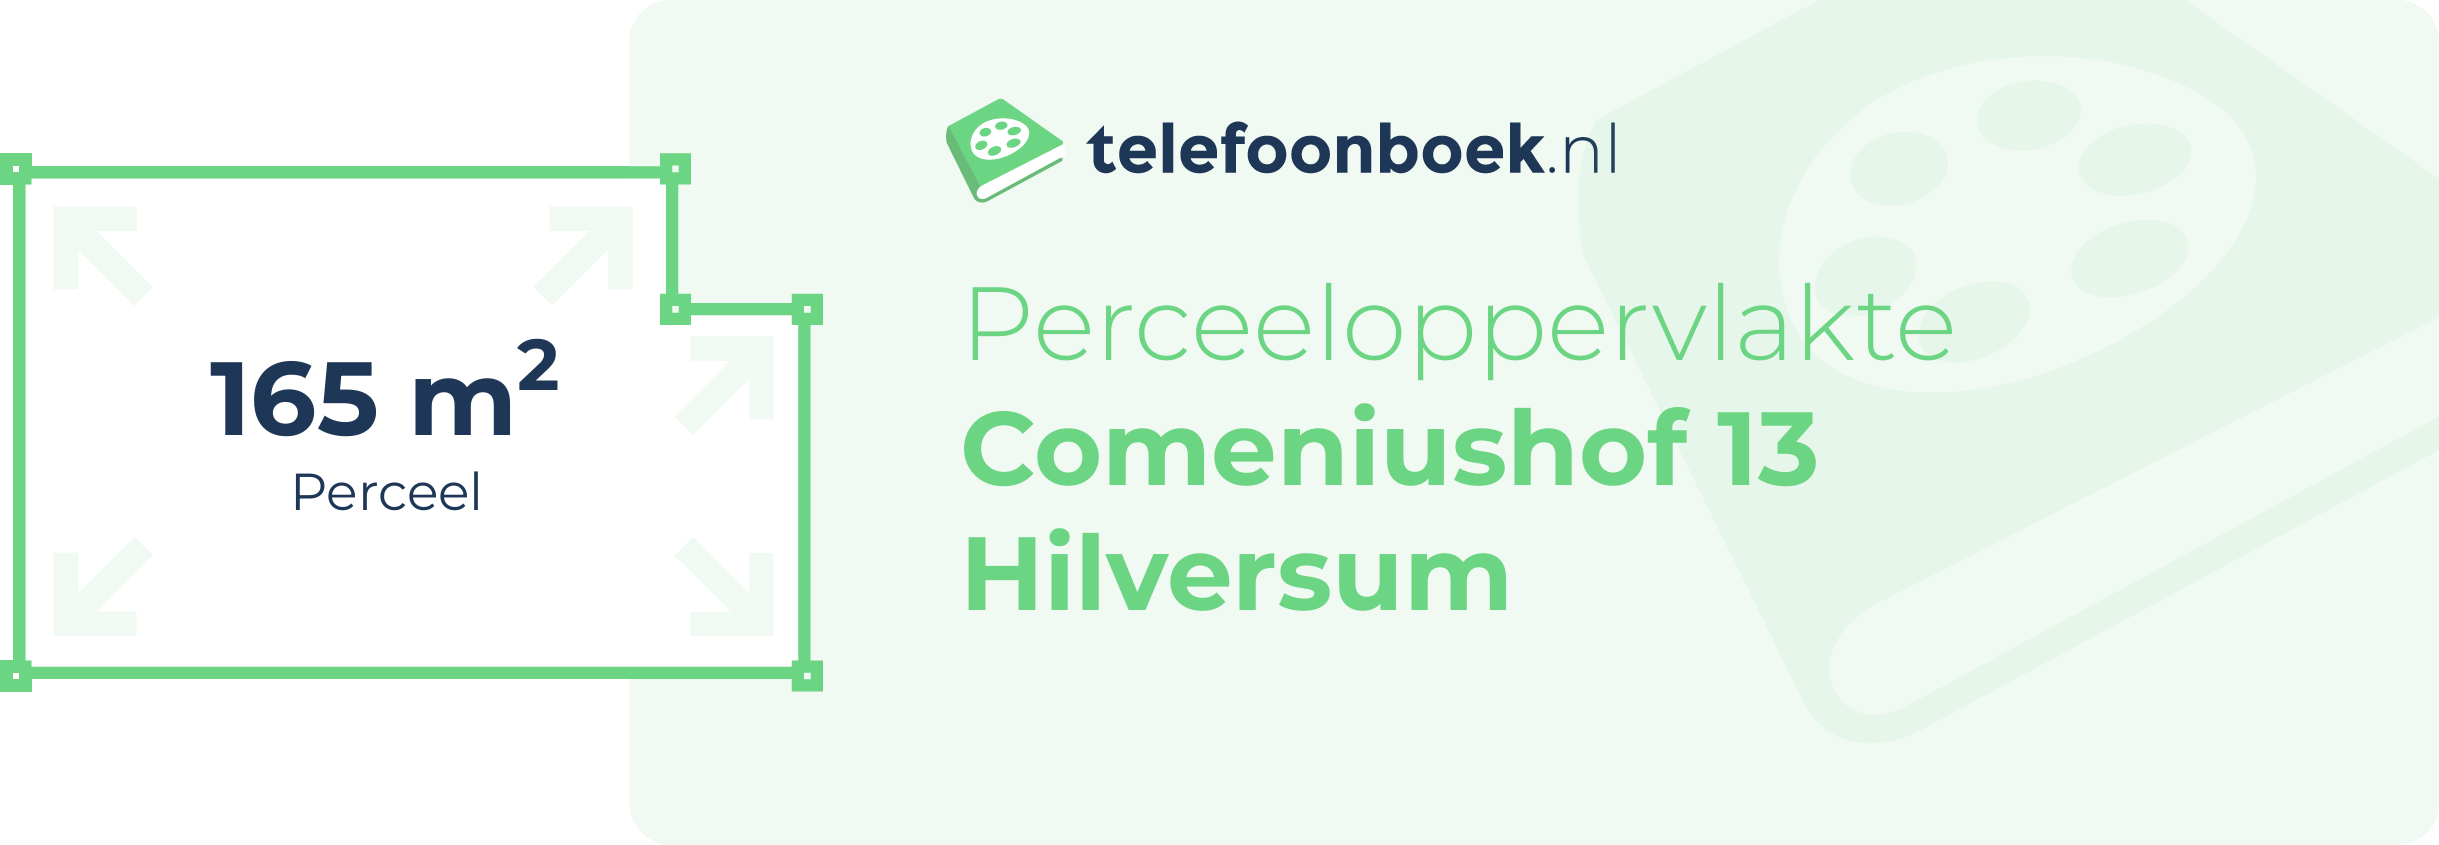 Perceeloppervlakte Comeniushof 13 Hilversum